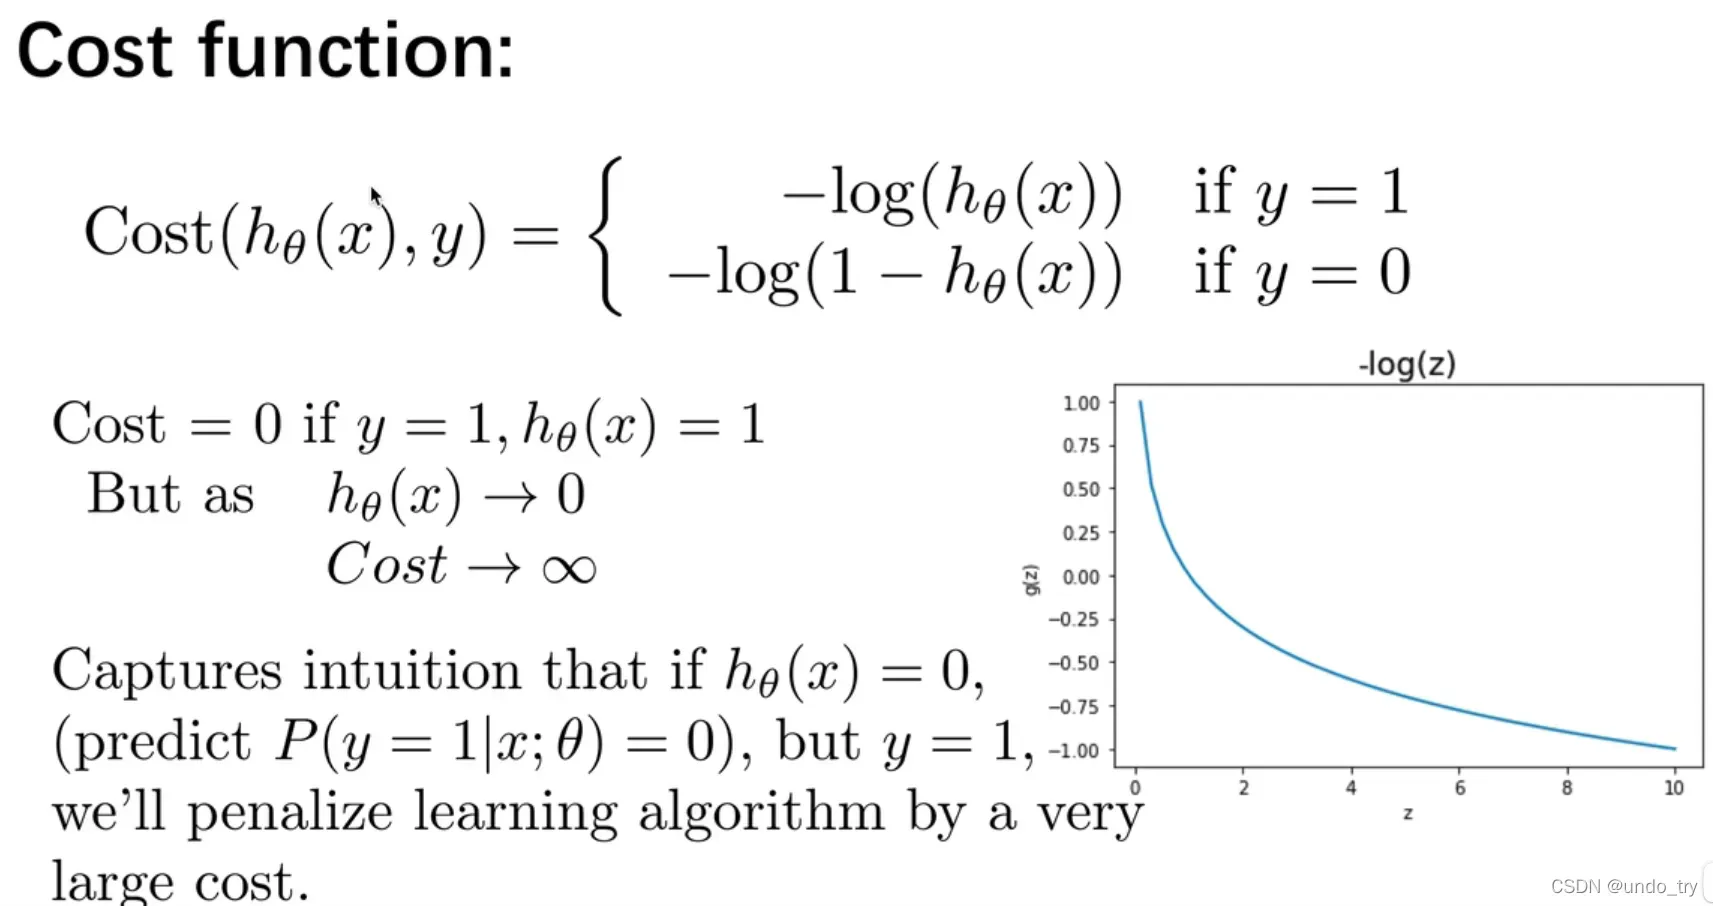 Andrew Ng机器学习（五）Logistic回归练习——二分类练习